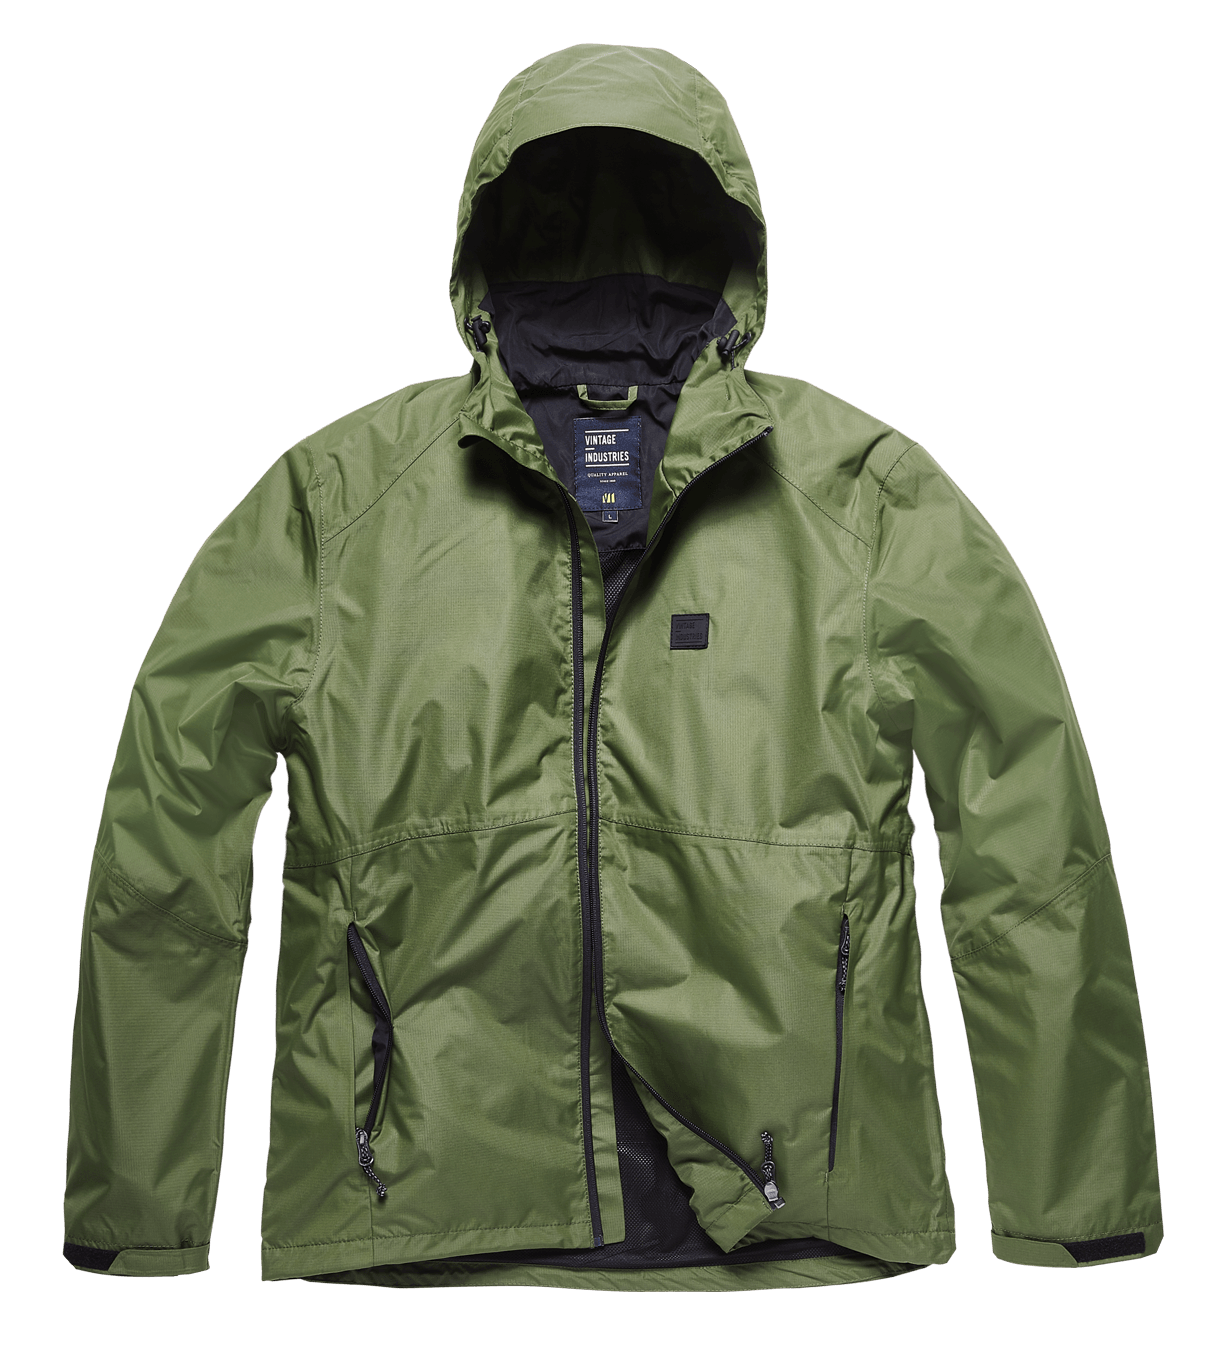 30105 - Verwood jacket